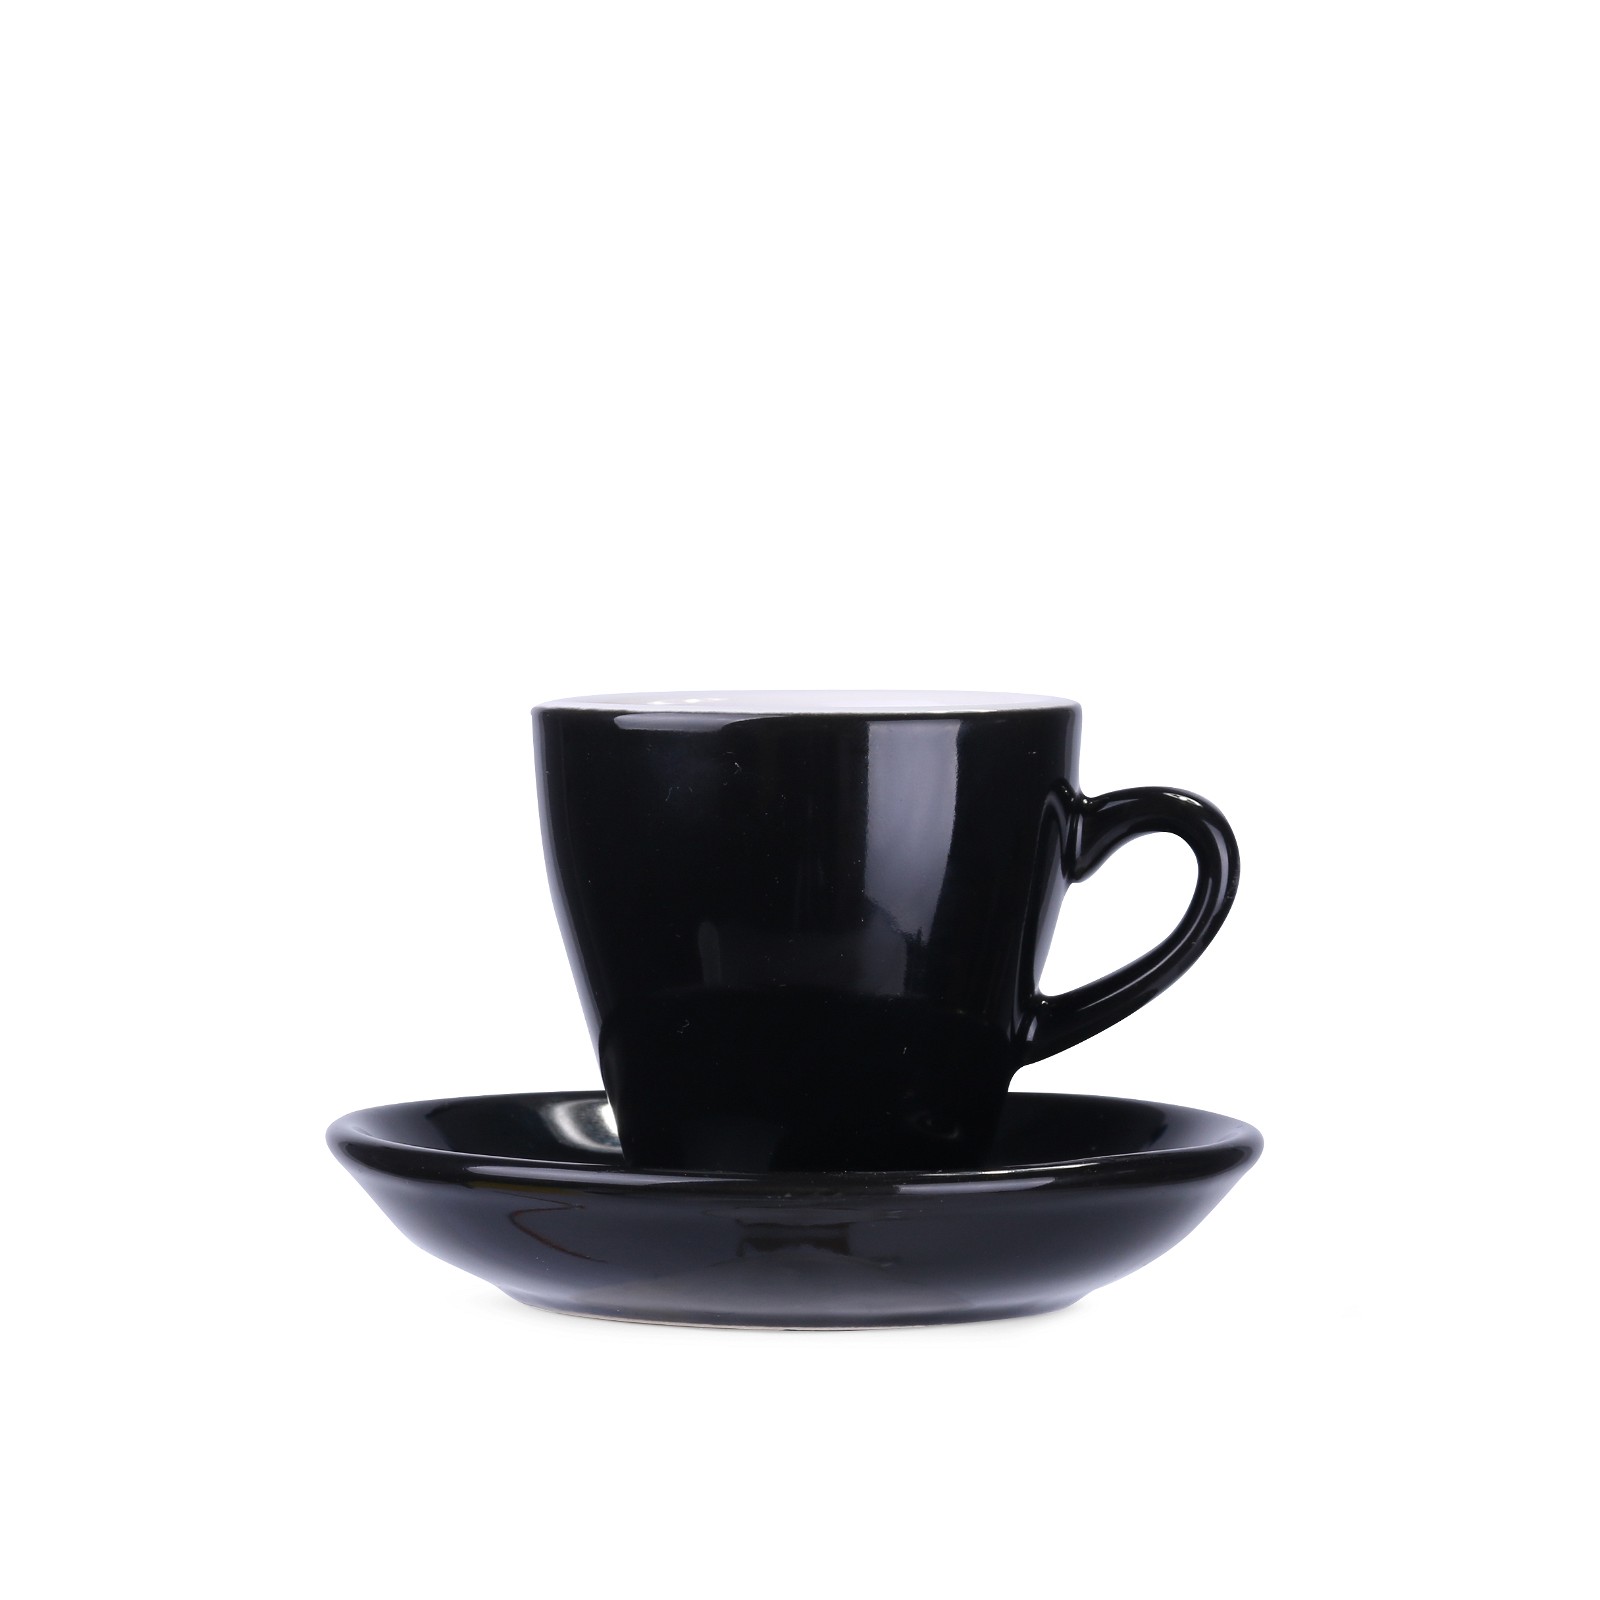 cup with a saucer verona espresso 80ml with logo